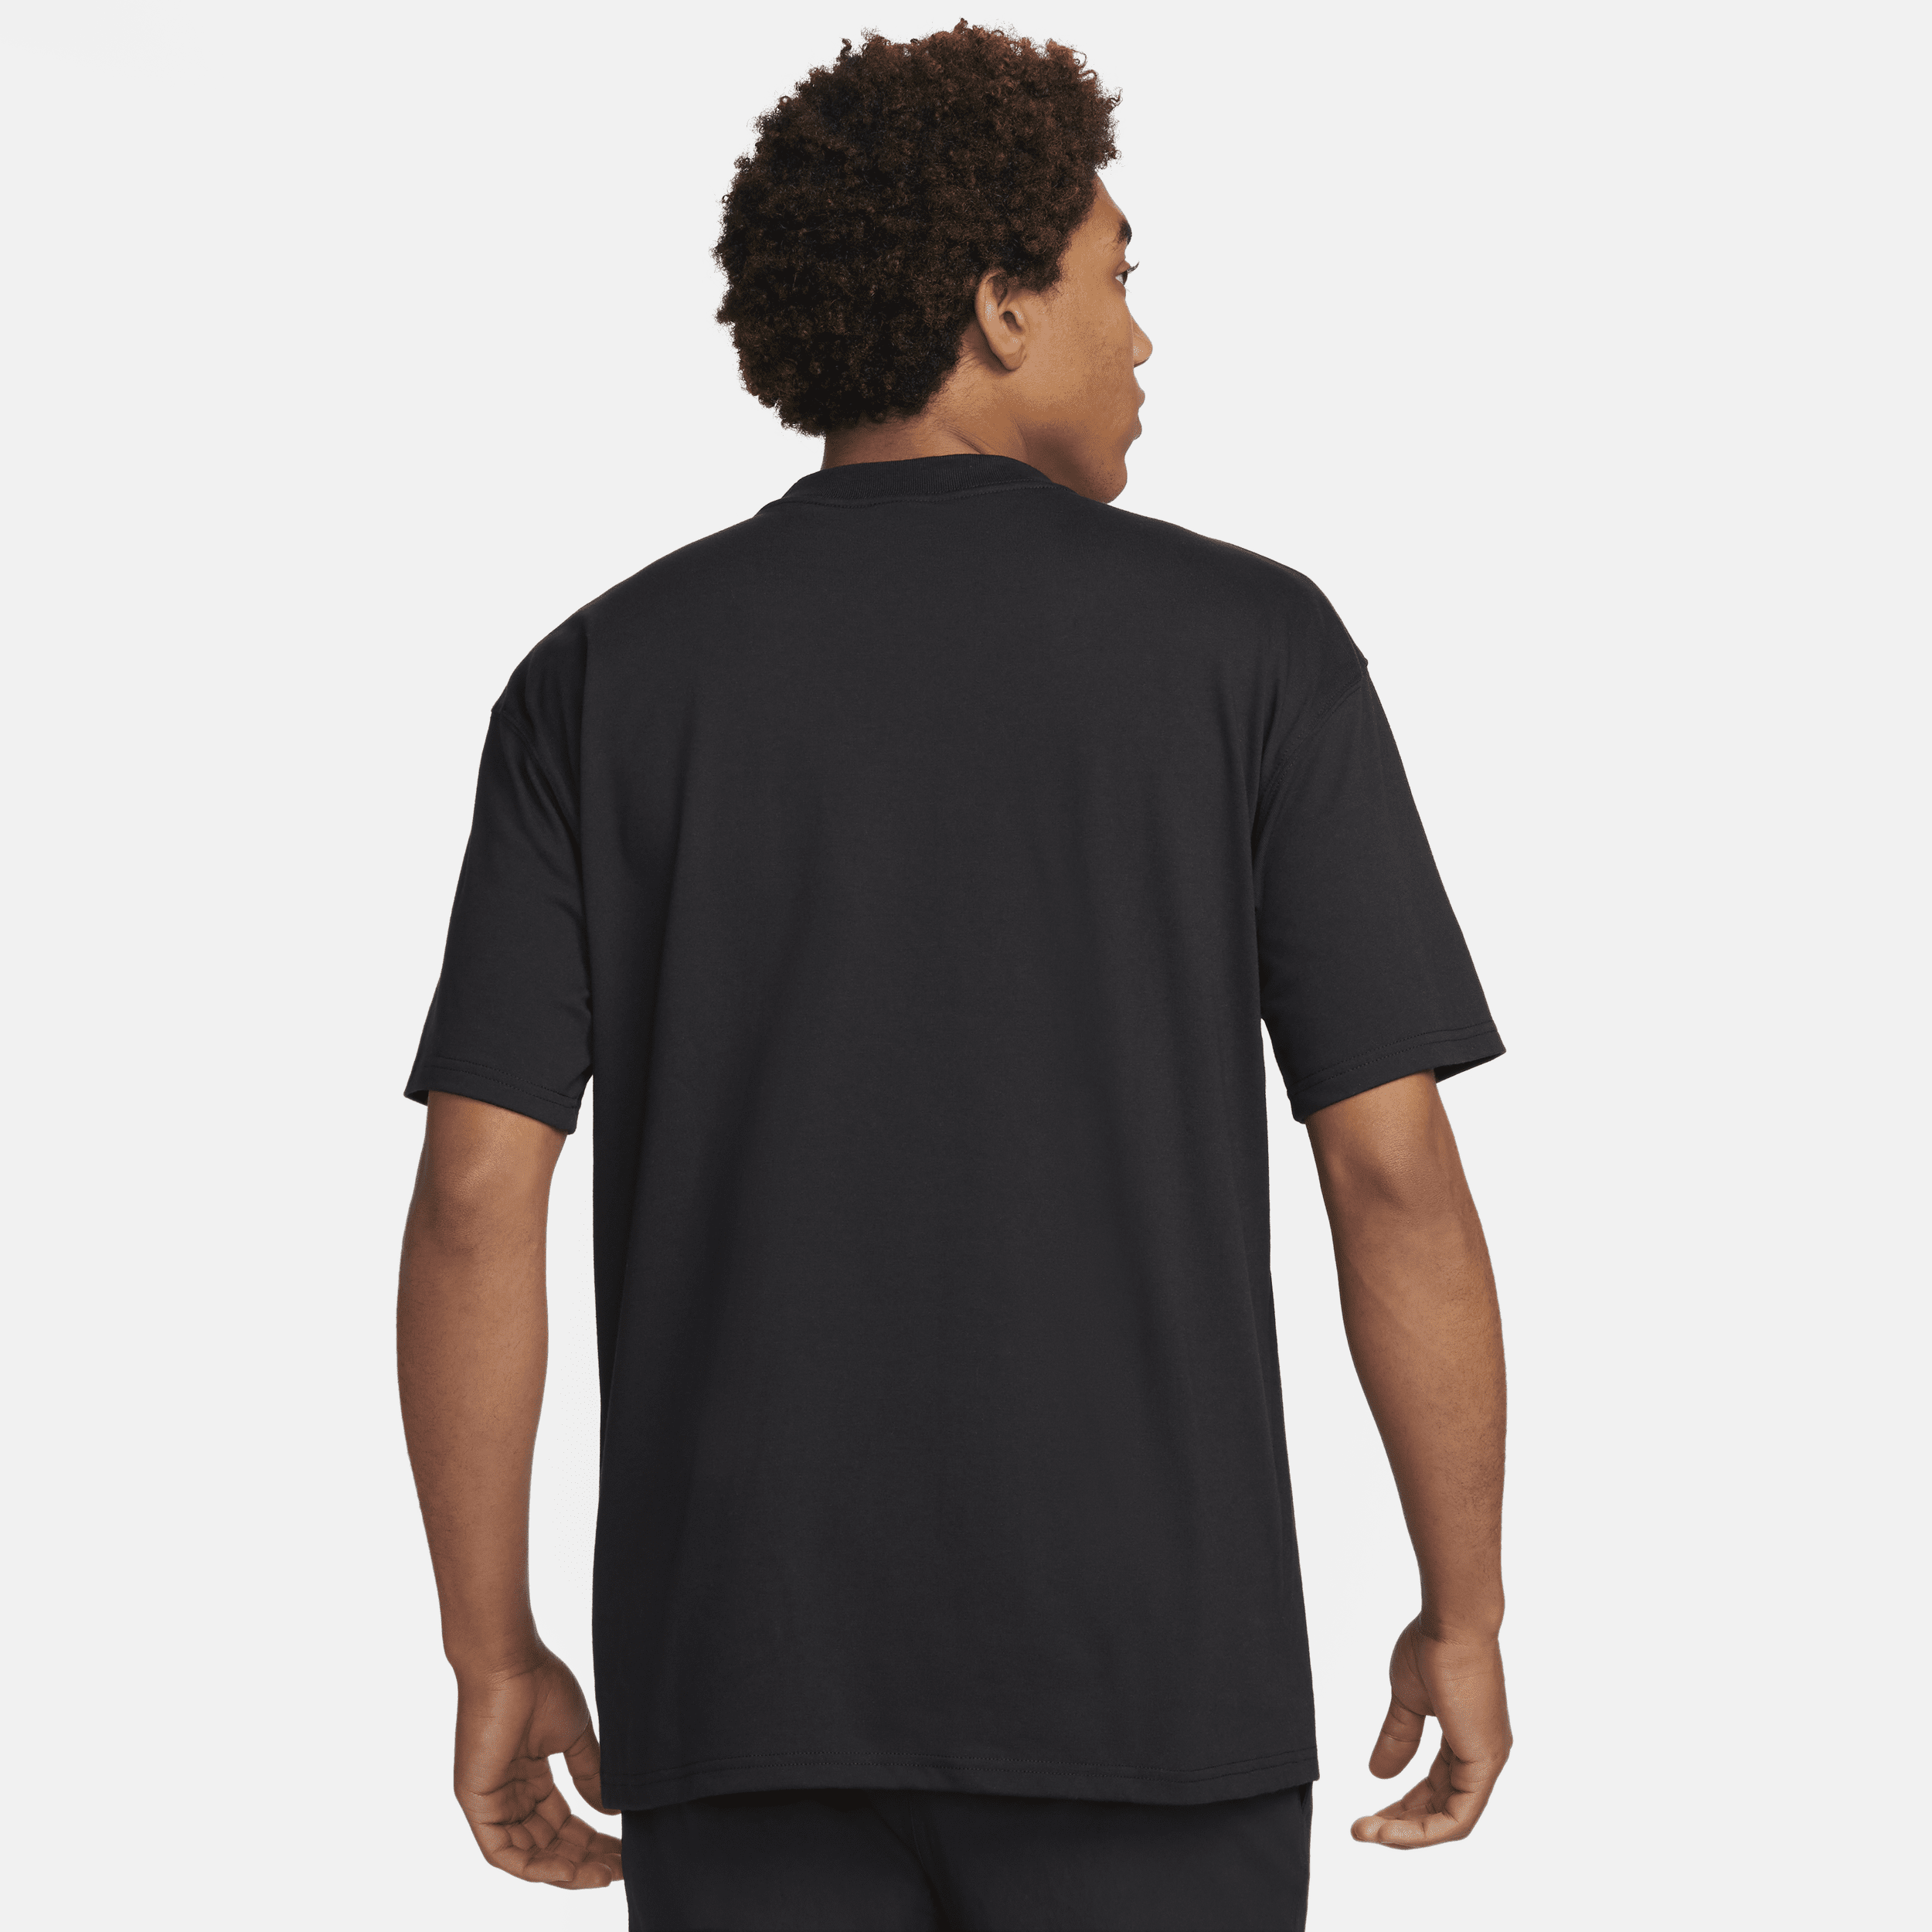 Nike ACG 'Cruise Boat' Dri-FIT T-shirt voor heren Zwart